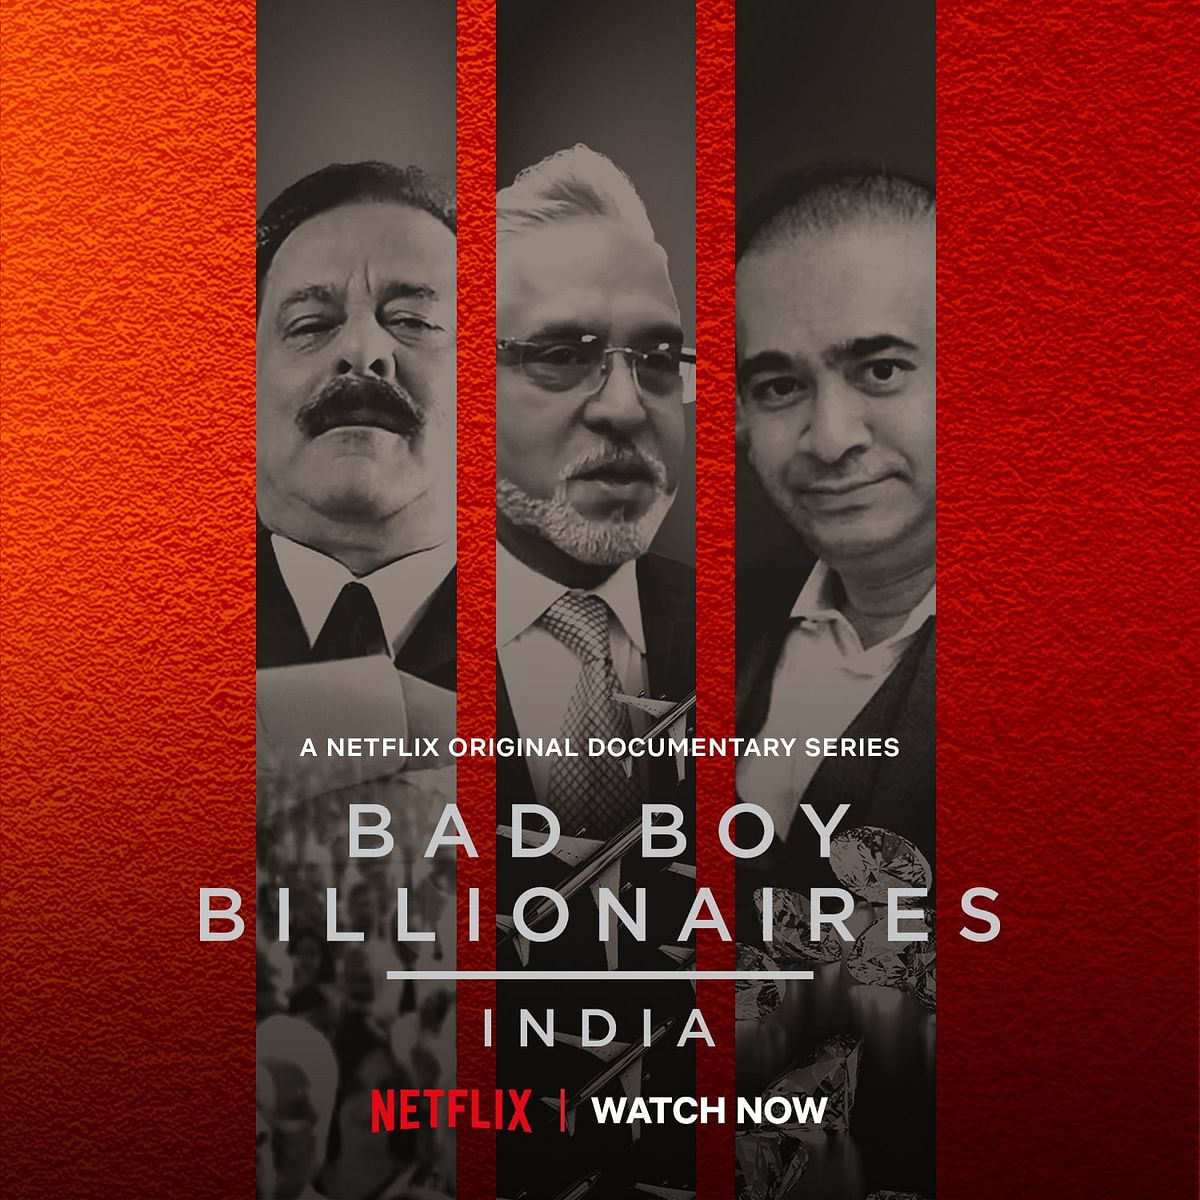 A review of ‘Bad Boy Billionaires’ which delves into the lives of Vijay Mallya, Nirav Modi and Subrata Roy.